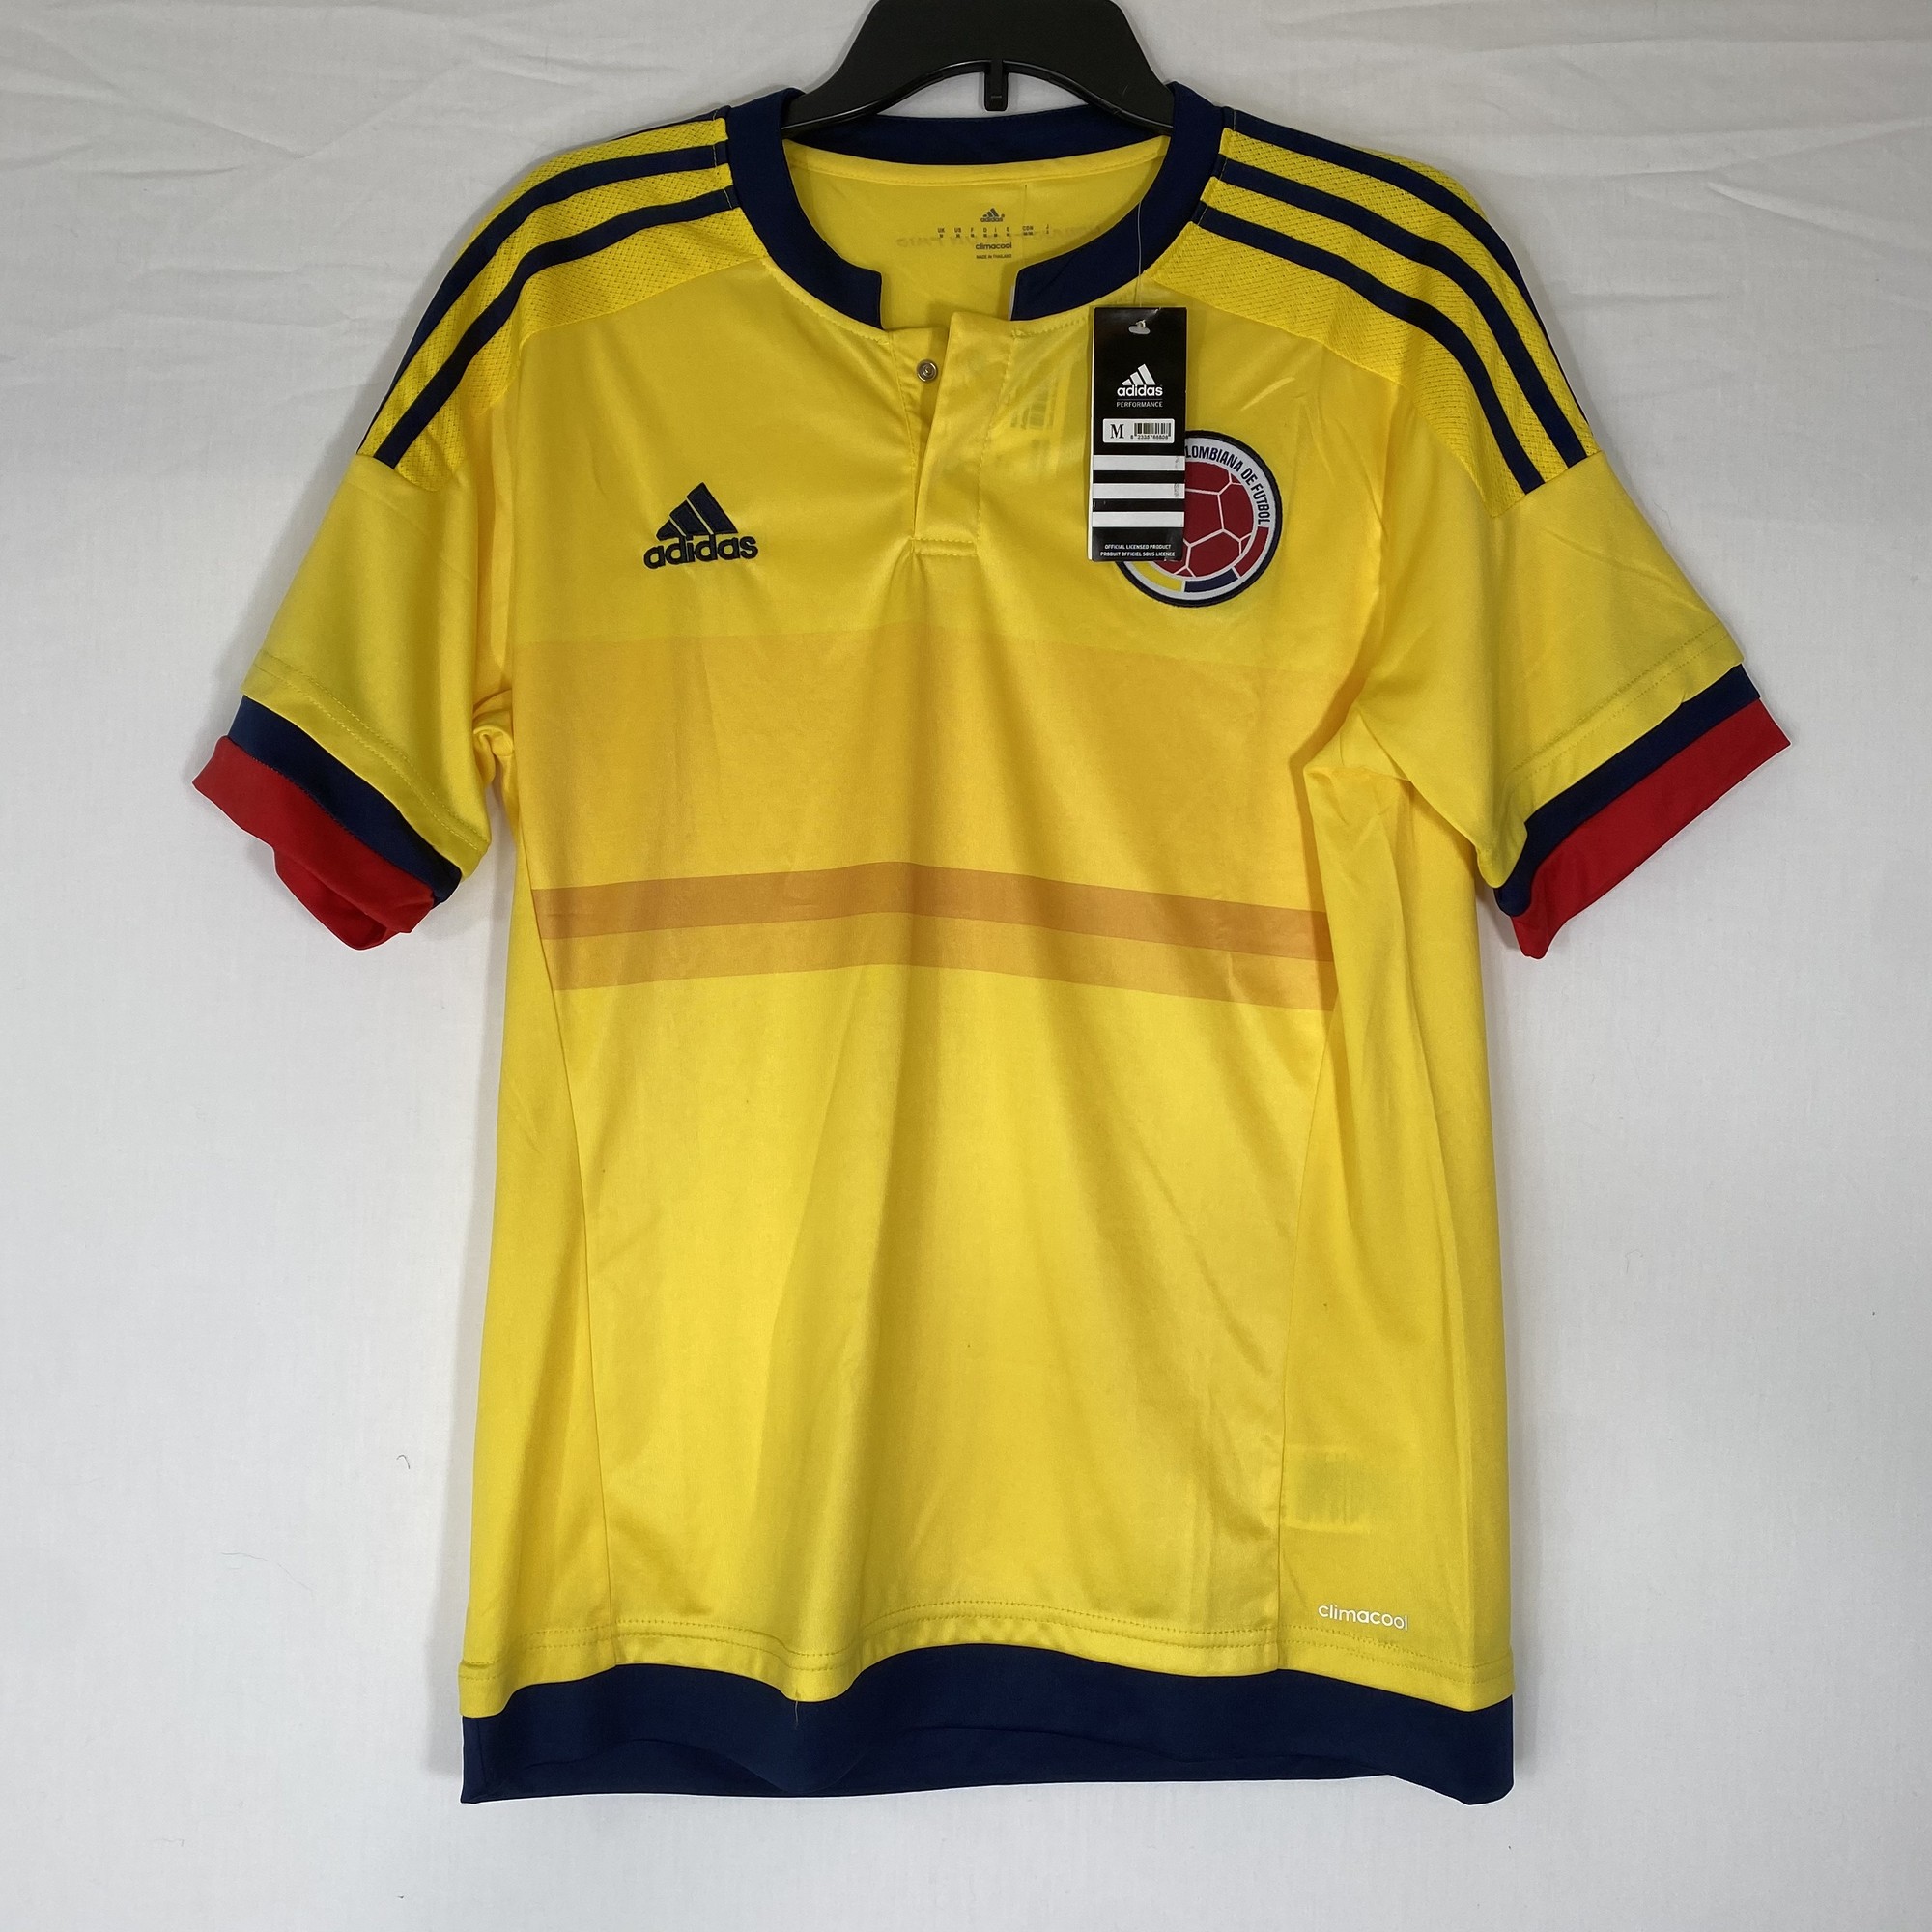 colombia futbol jersey